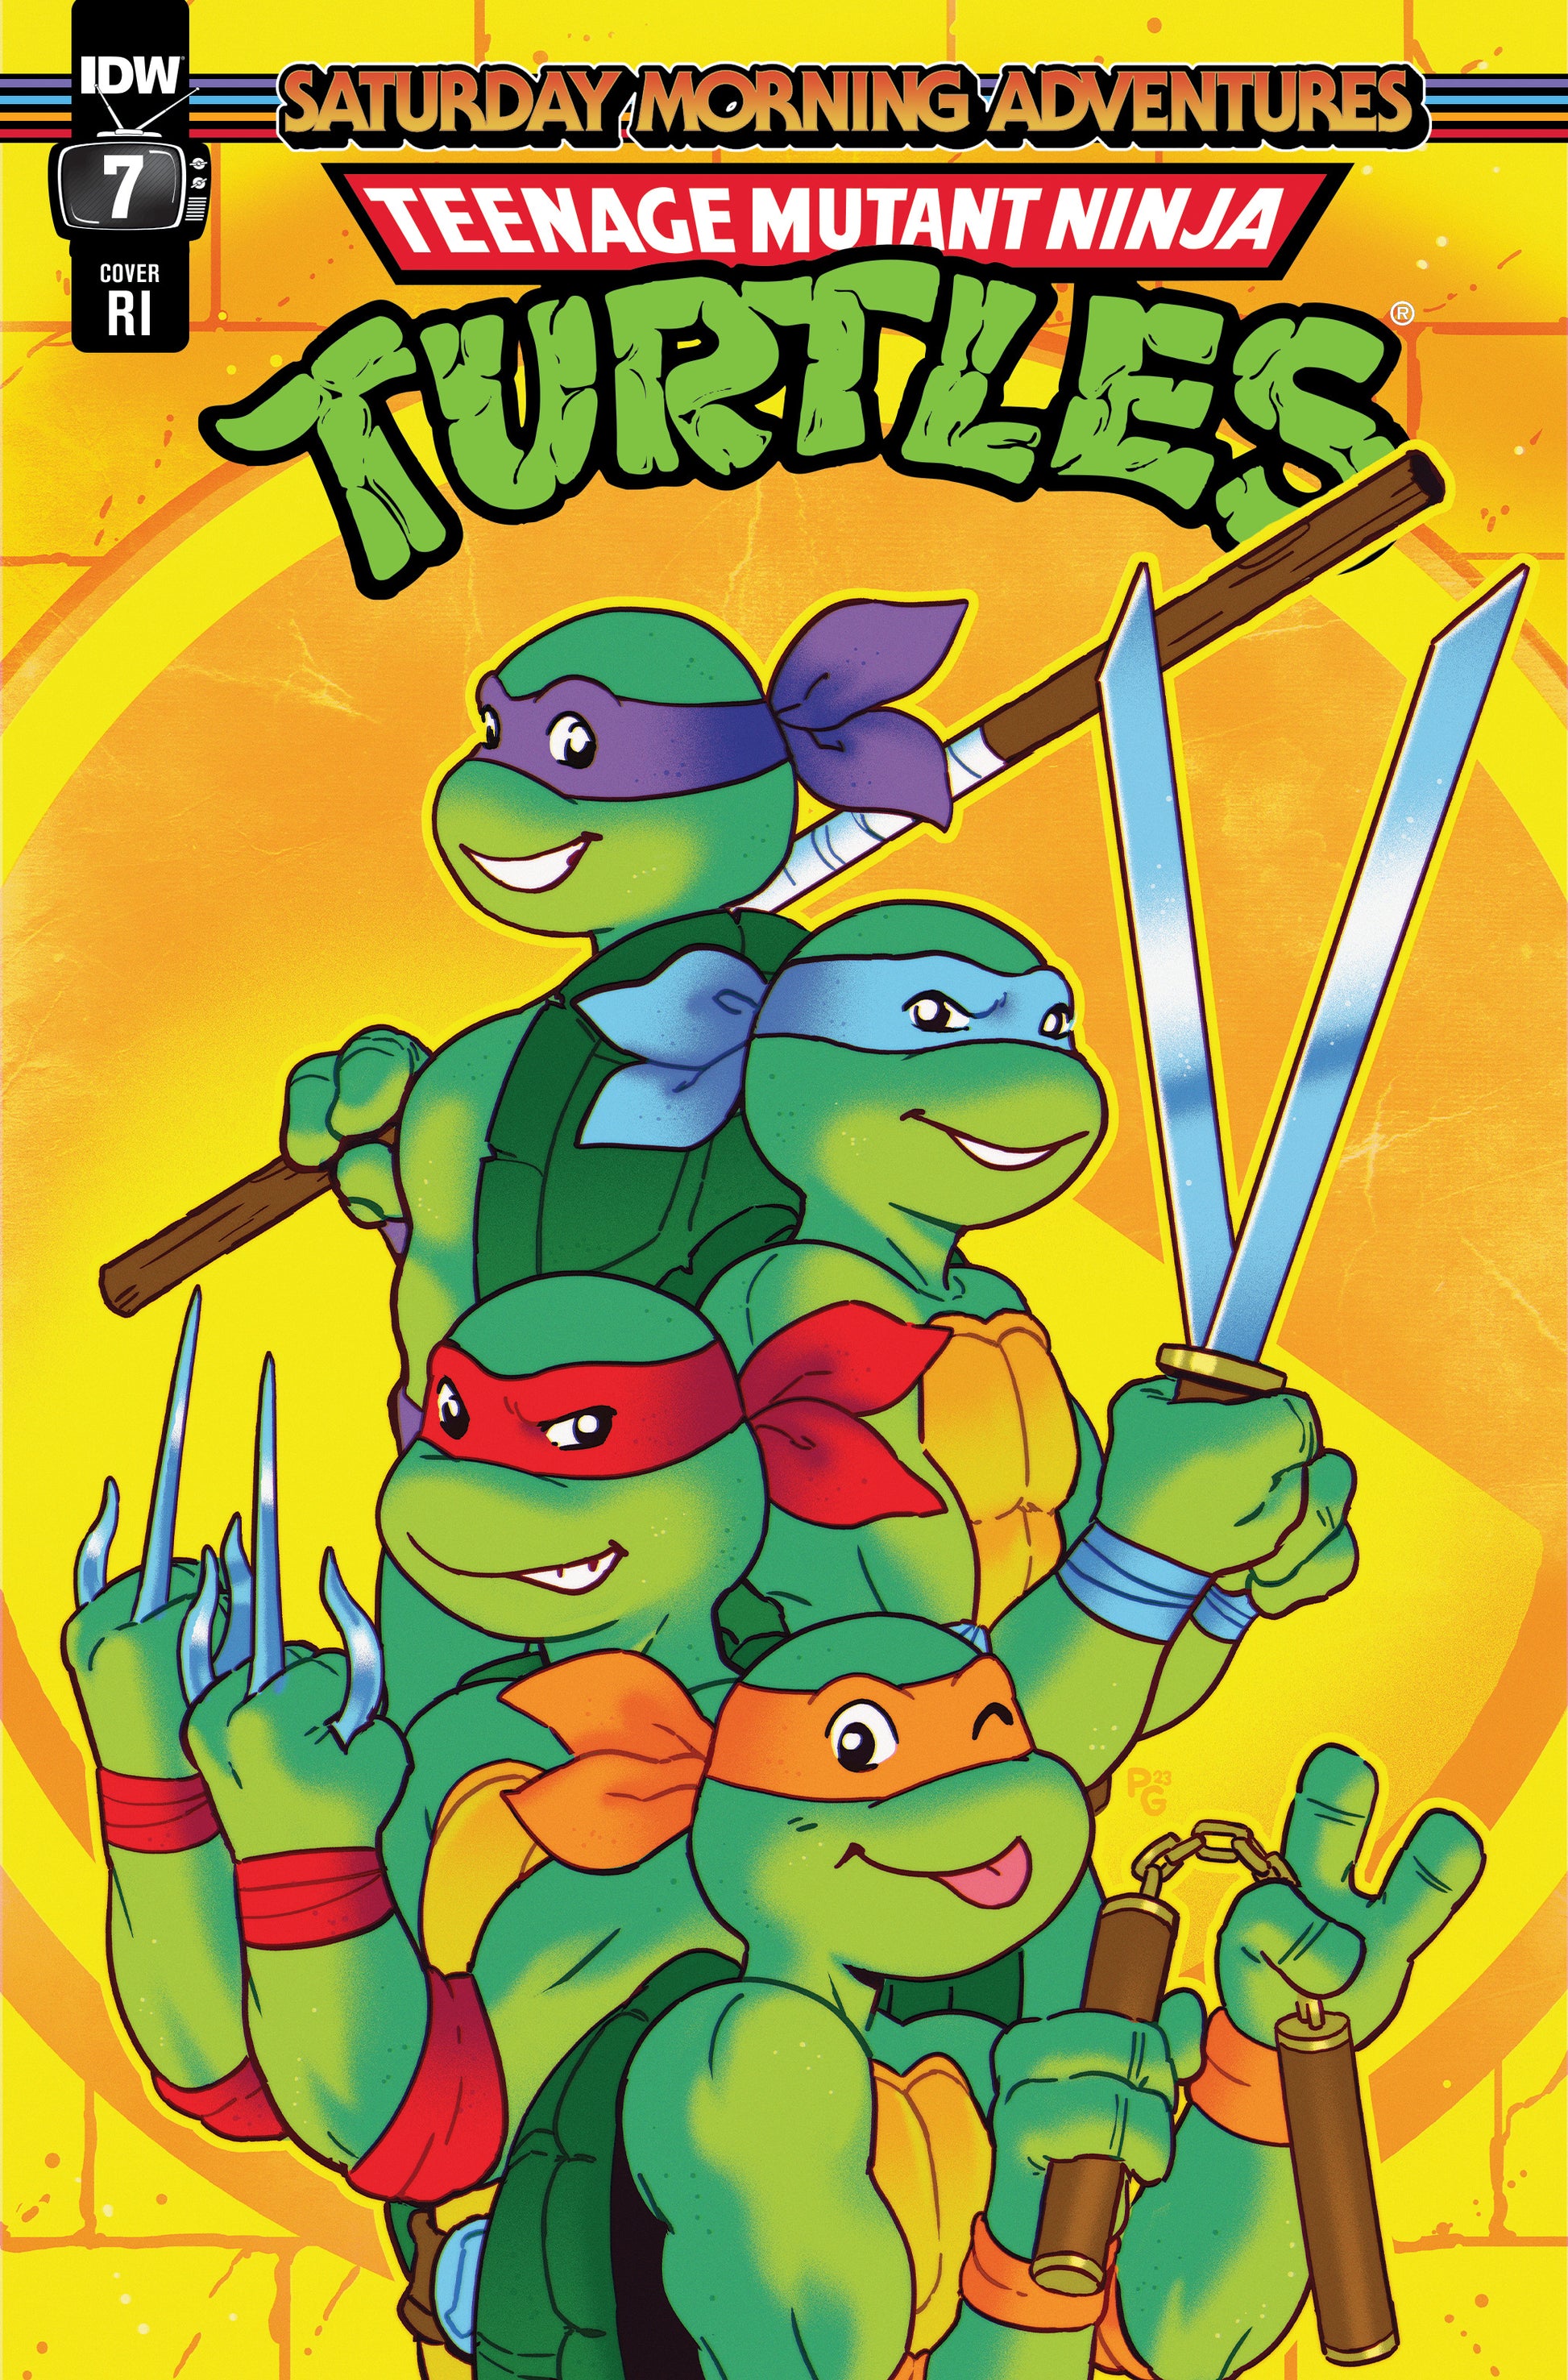 Teenage Mutant Ninja Turtles Season 10 DVD review